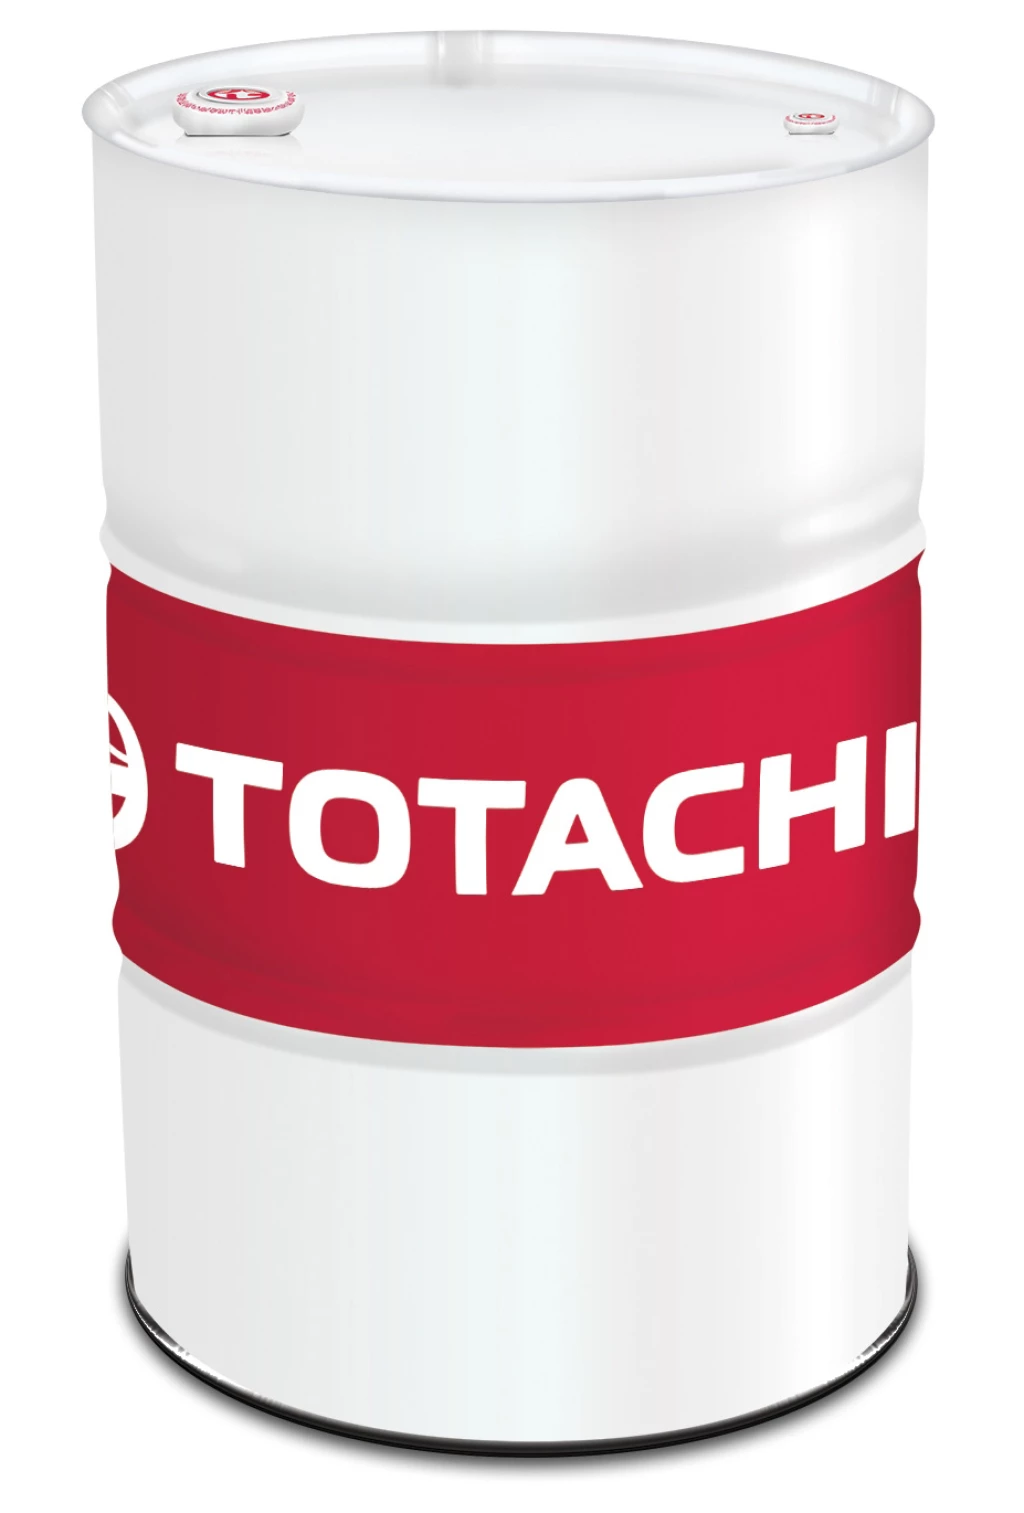 Моторное масло TOTACHI NIRO LV Synthetic 5W-40 синтетическое 205 л